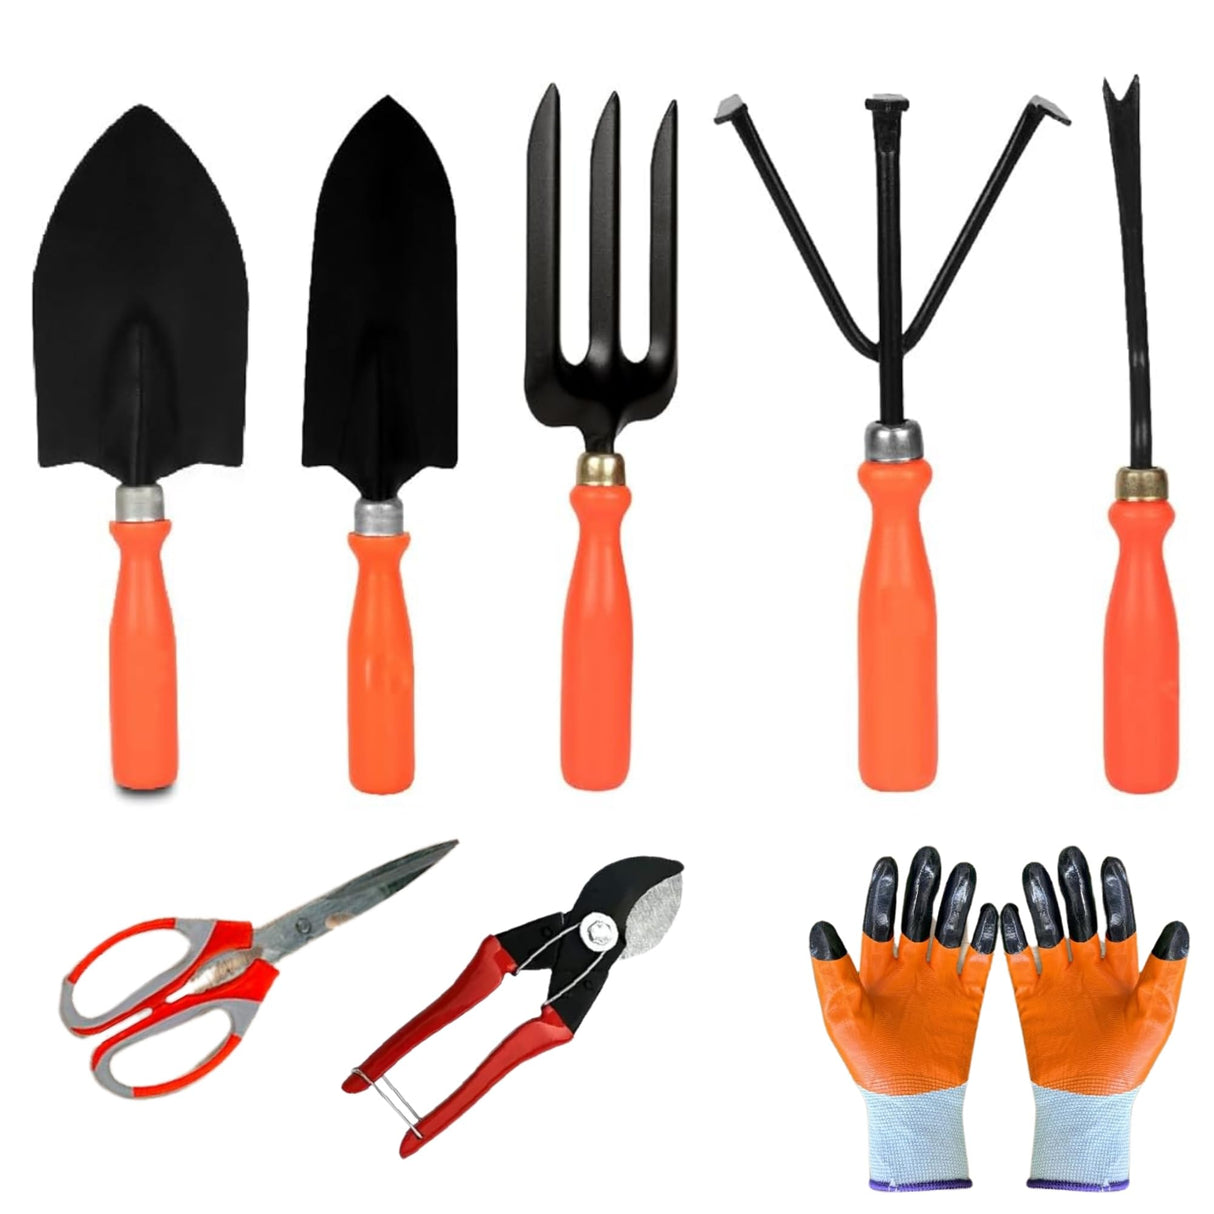 Singhal Gardening Tools Kit - 8 Pcs (Cultivator, Fork, Trowels, Weeder, Garden Gloves, Pruner Cutter, Scissors) | Gardening Tools Set for Home Garden